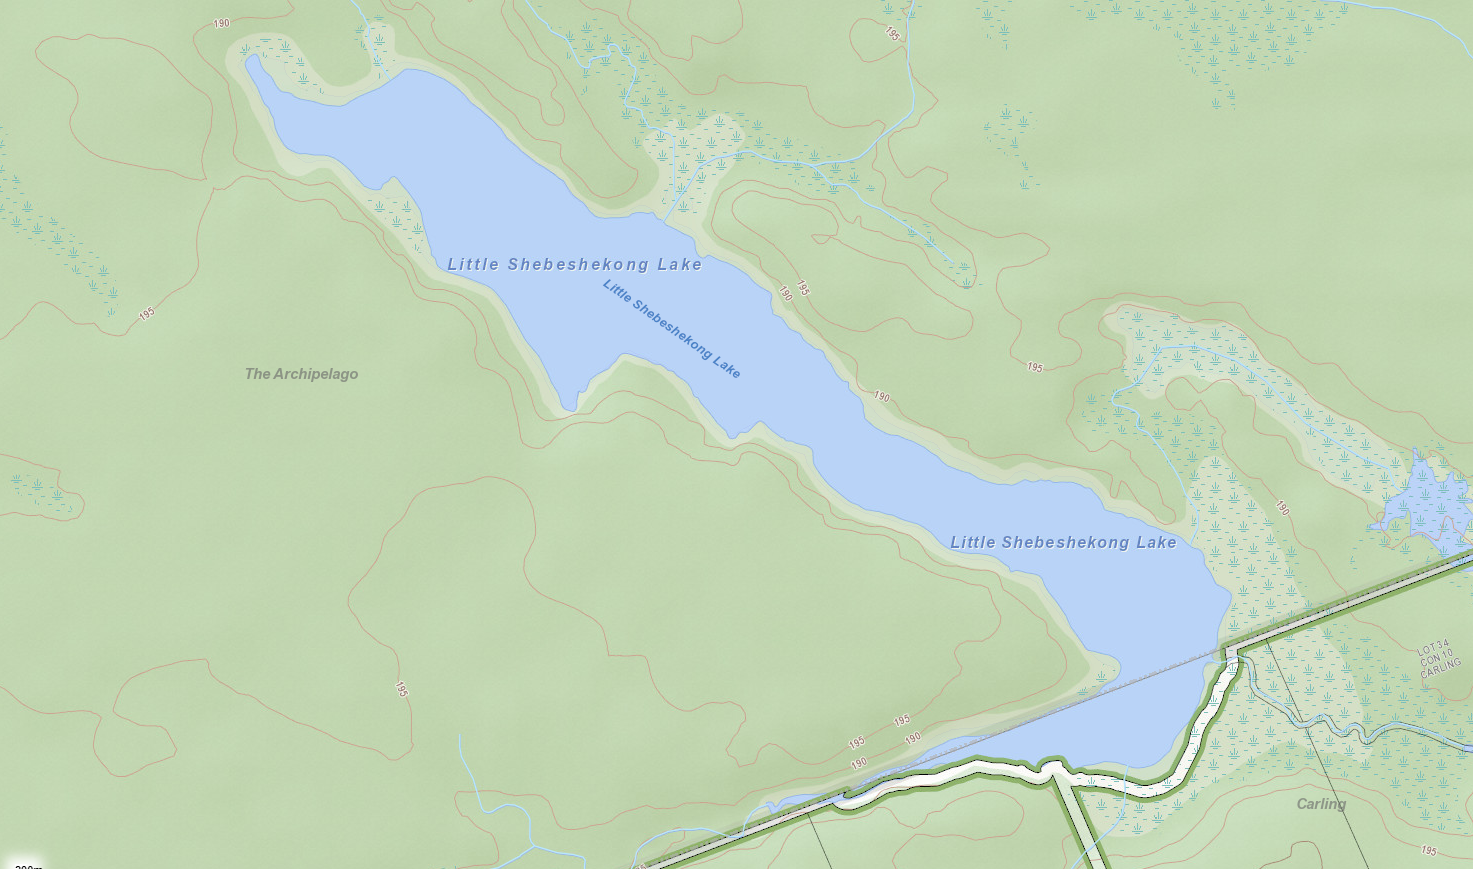 Adam's Lake Cadastral Map - Adam's Lake - Muskoka